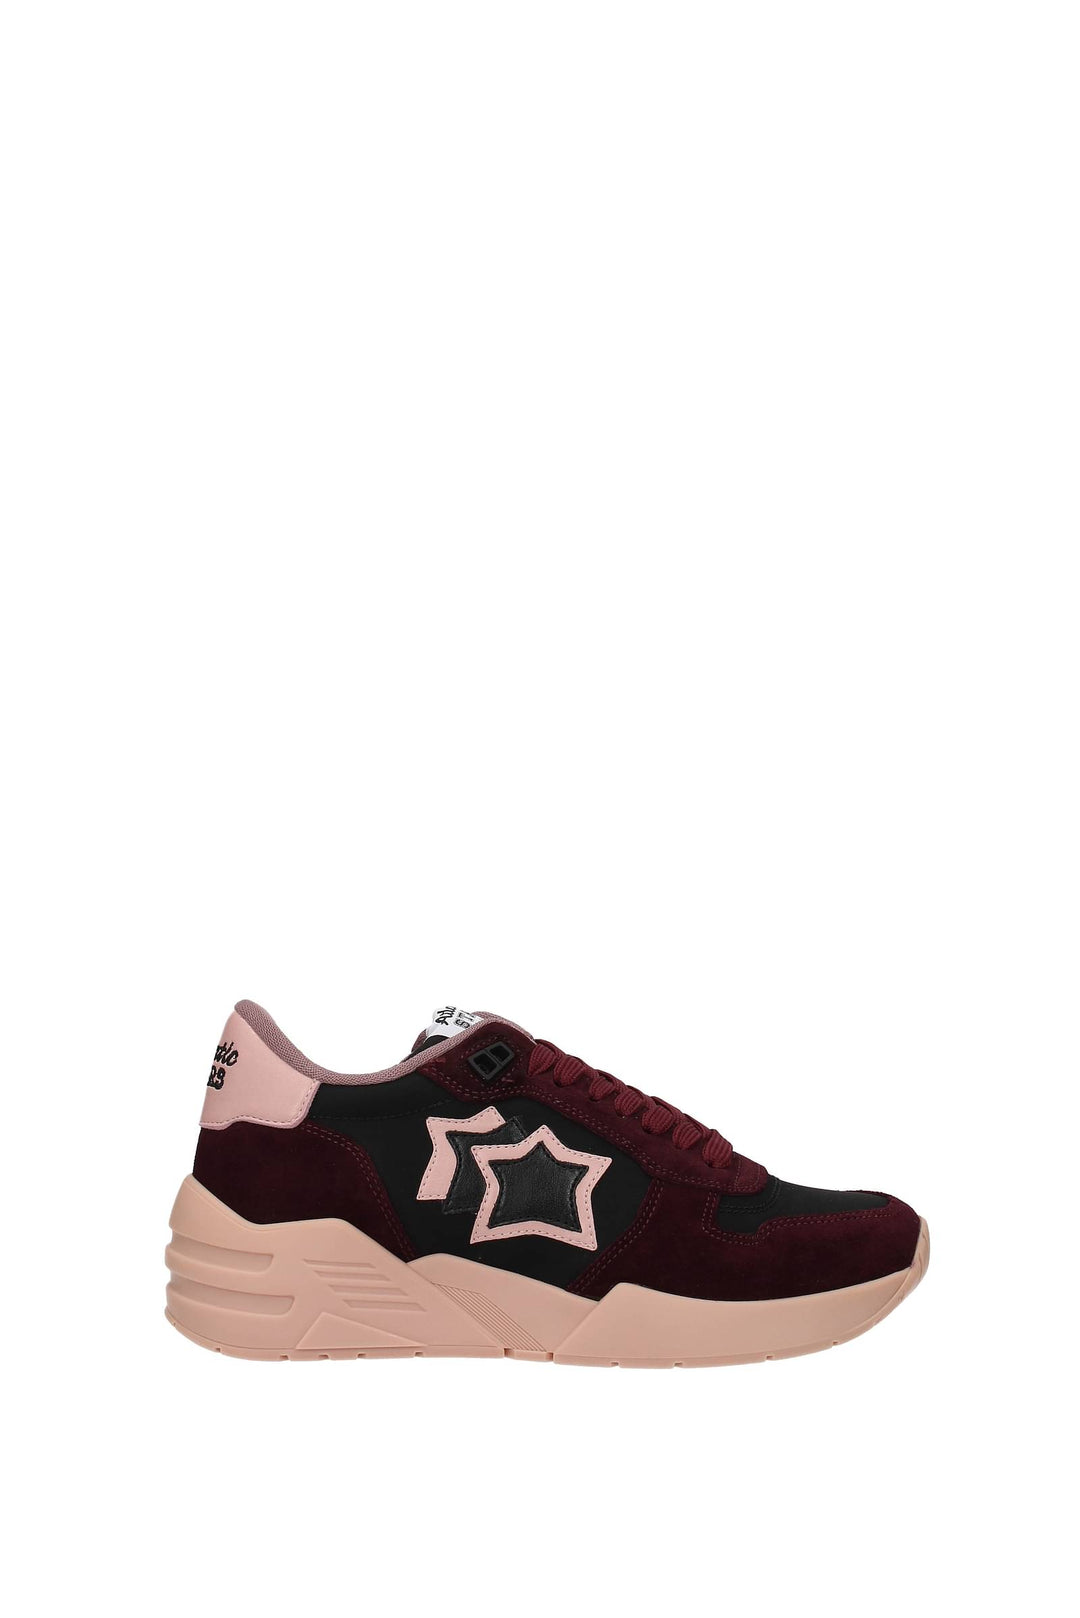 Sneakers Venus Tessuto Nero Bordeaux - Atlantic Stars - Donna